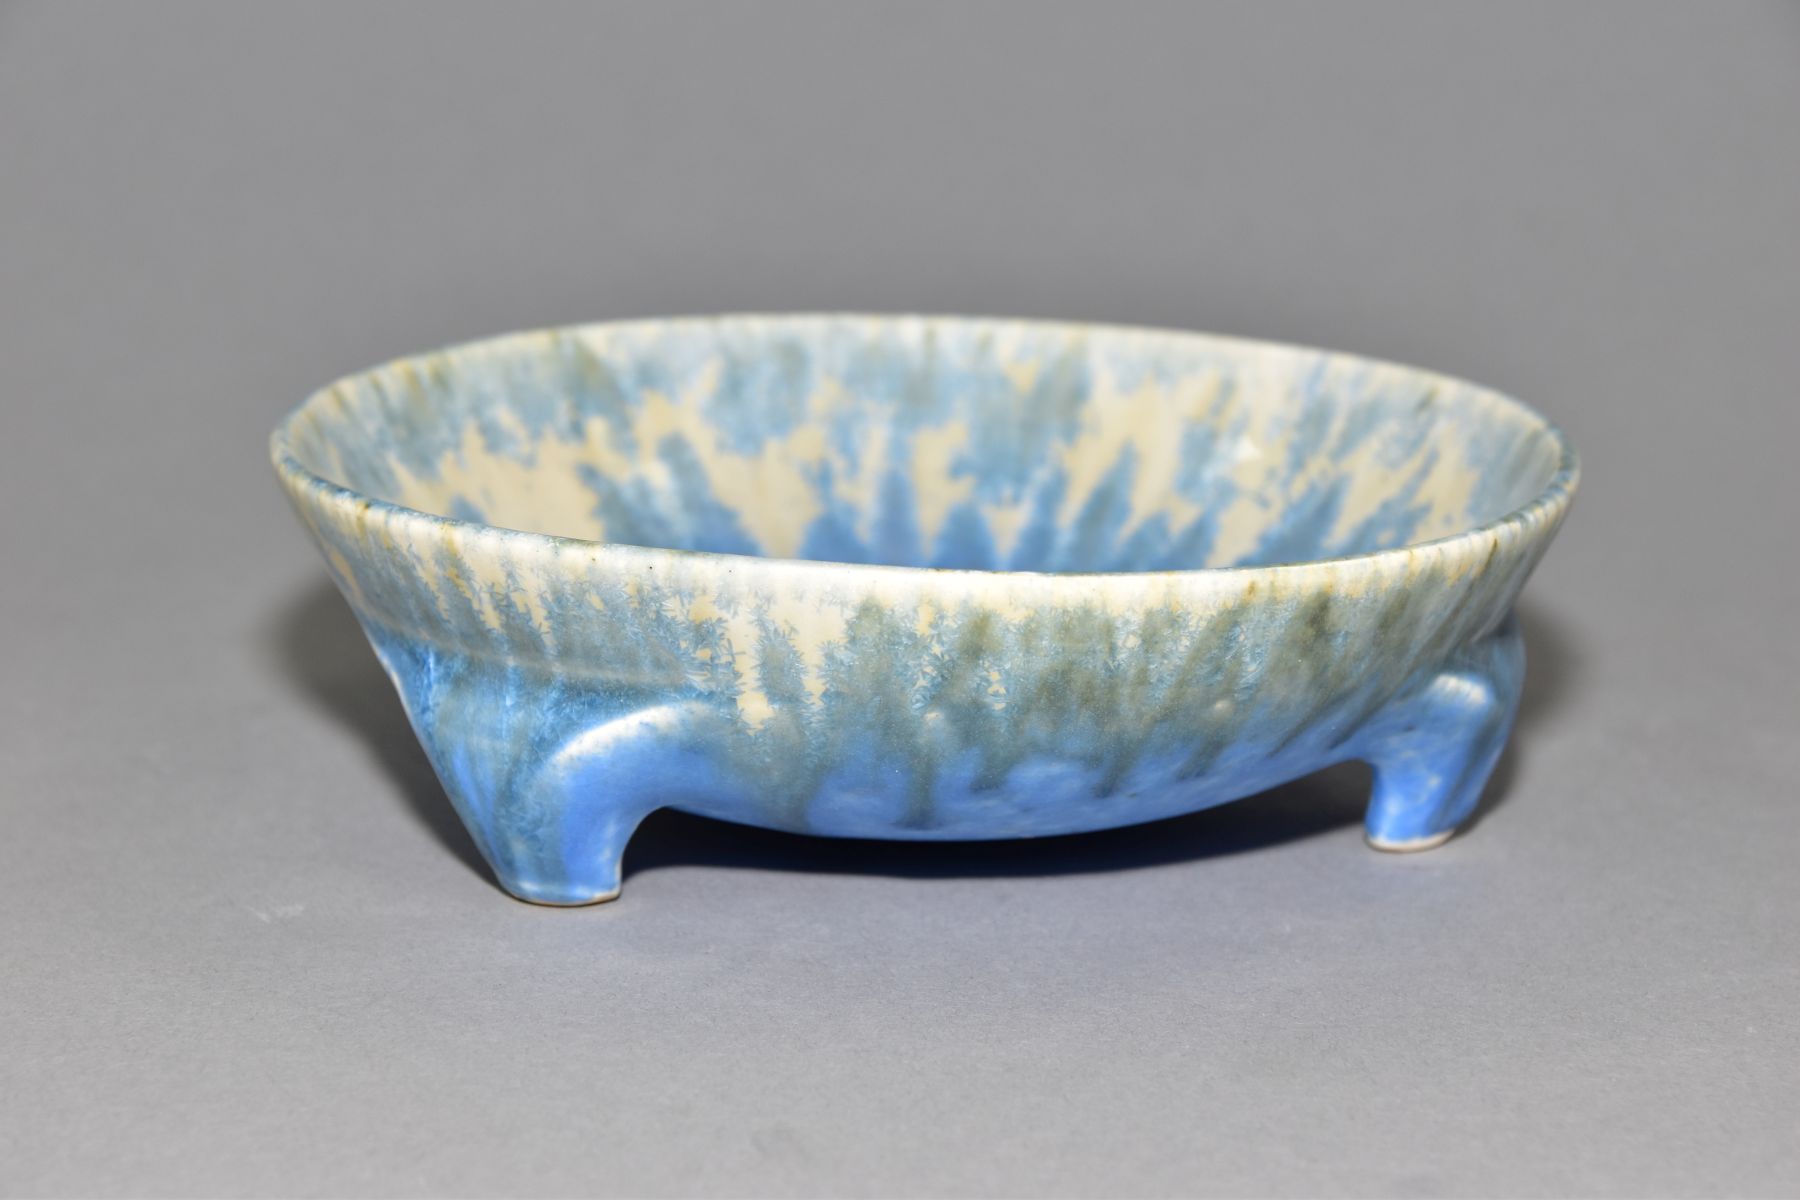 RUSKIN POTTERY, a shallow bowl raised on three feet, blue and orange crystalline glaze over white